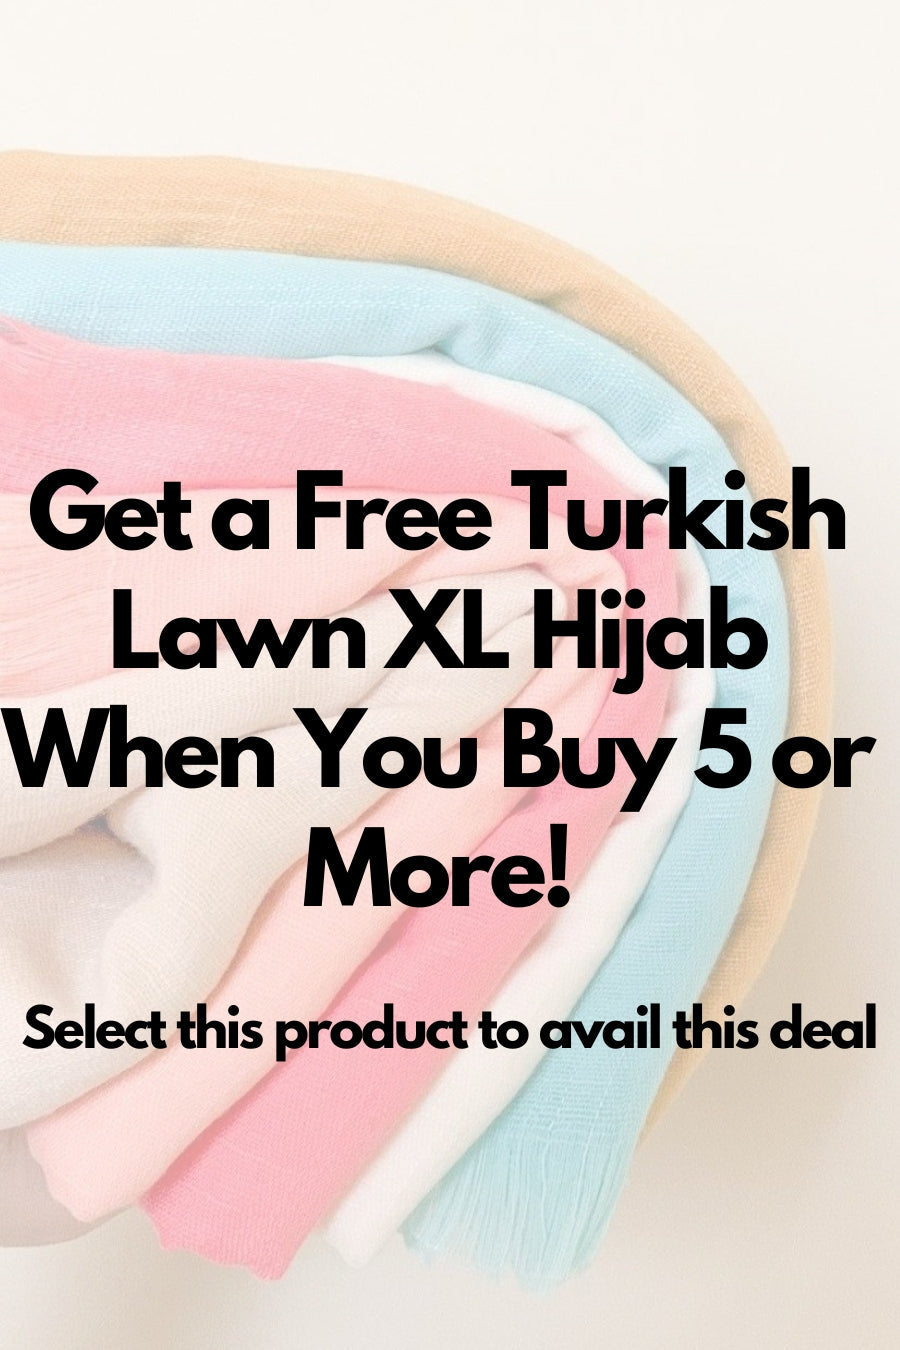 Turkish Lawn XL Hijabs - Buy 5Get 1 Free